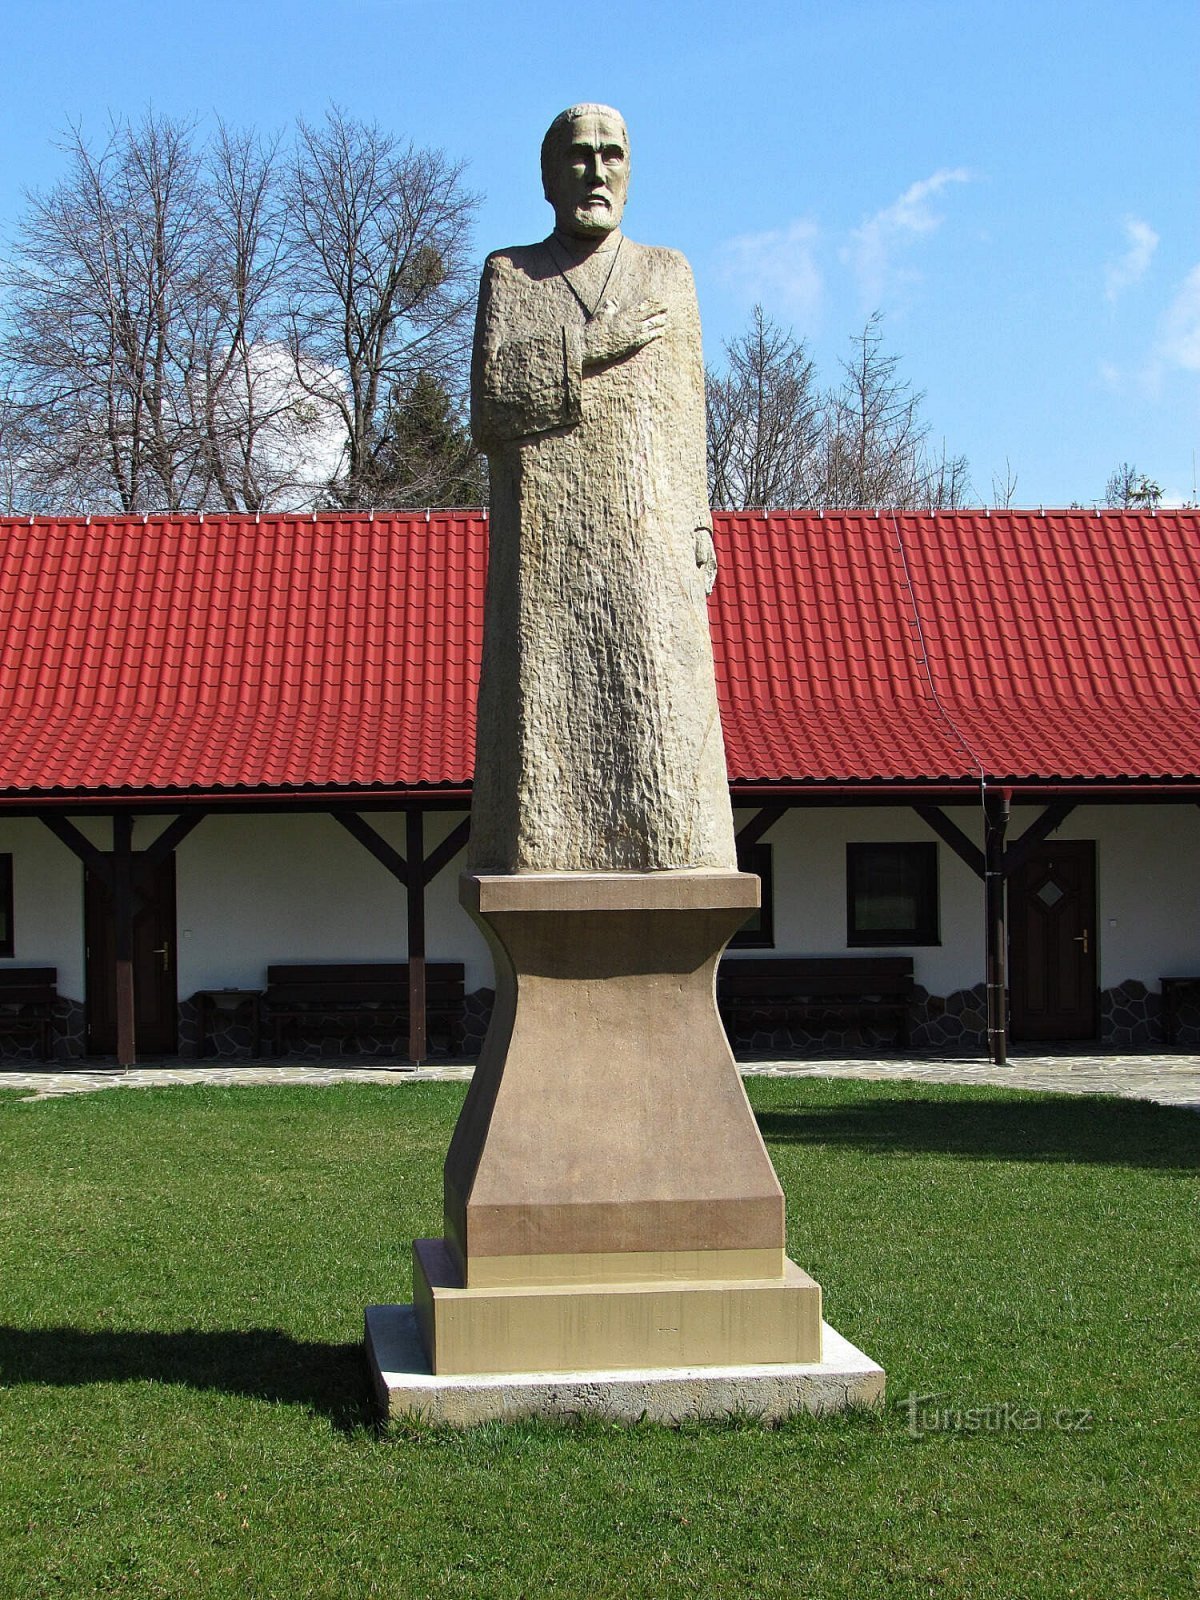 Прженске Пасеки - статуя Гуса и постамент без статуи